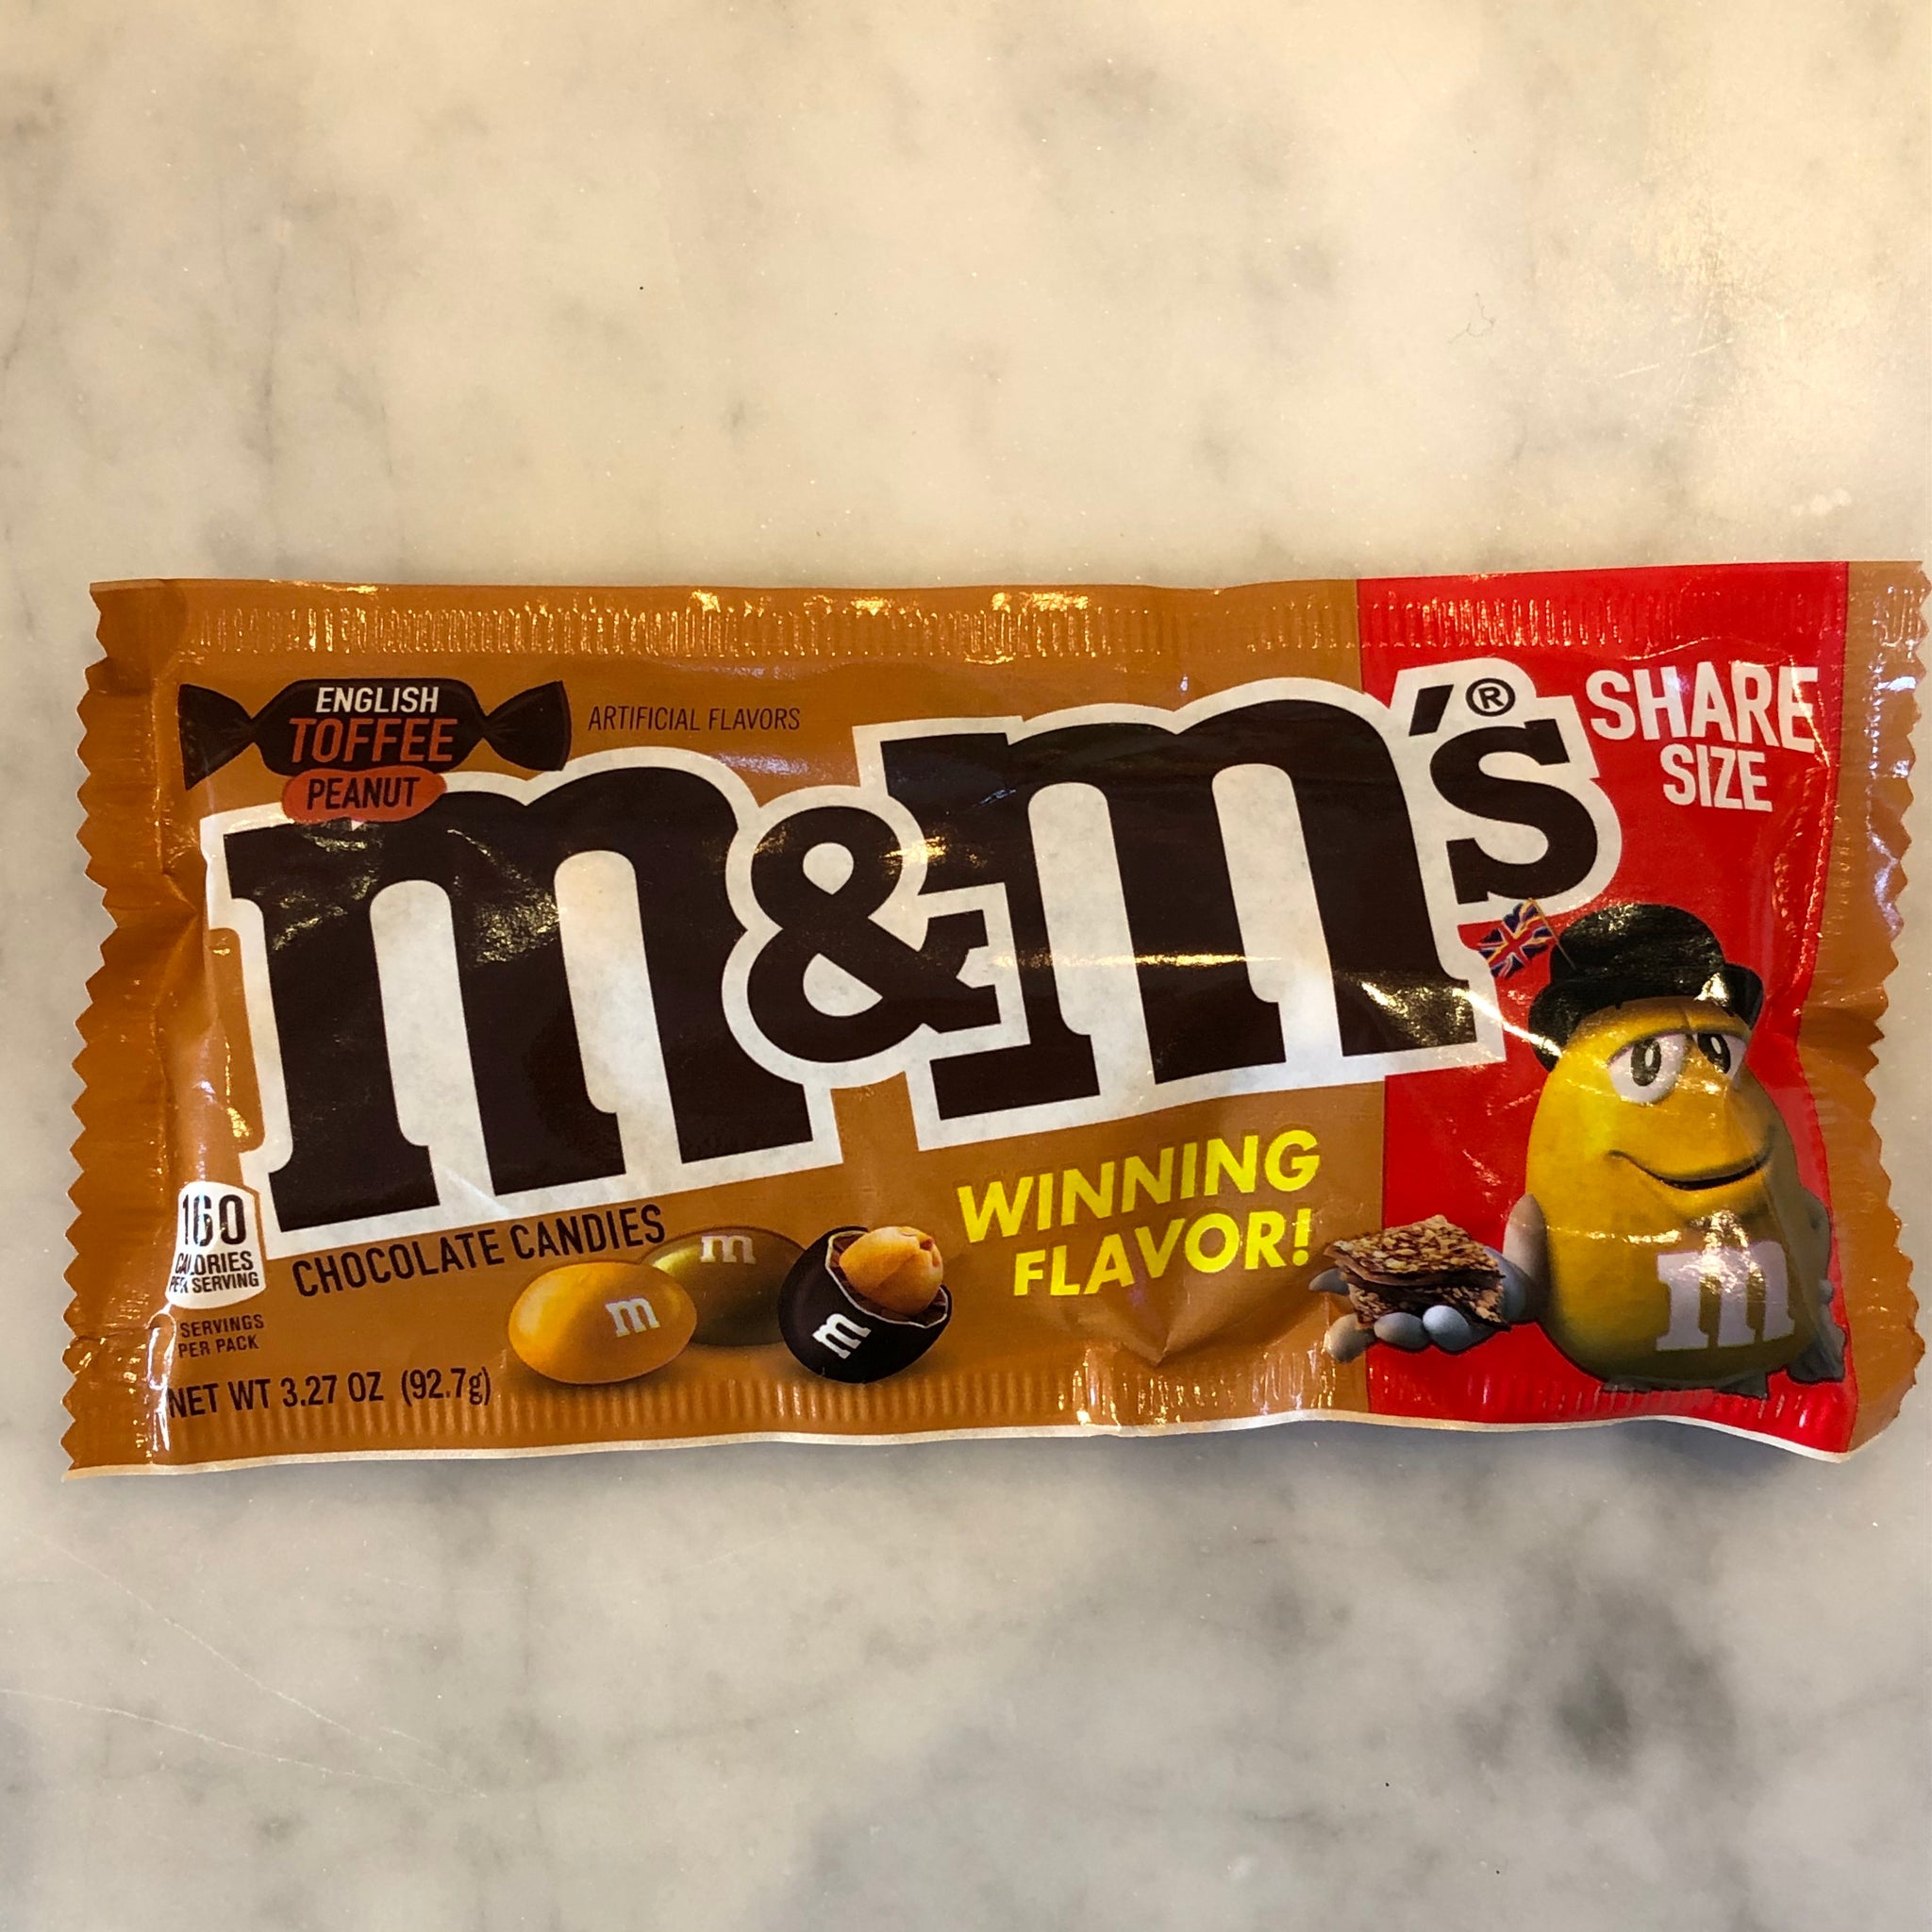 peanut m&ms